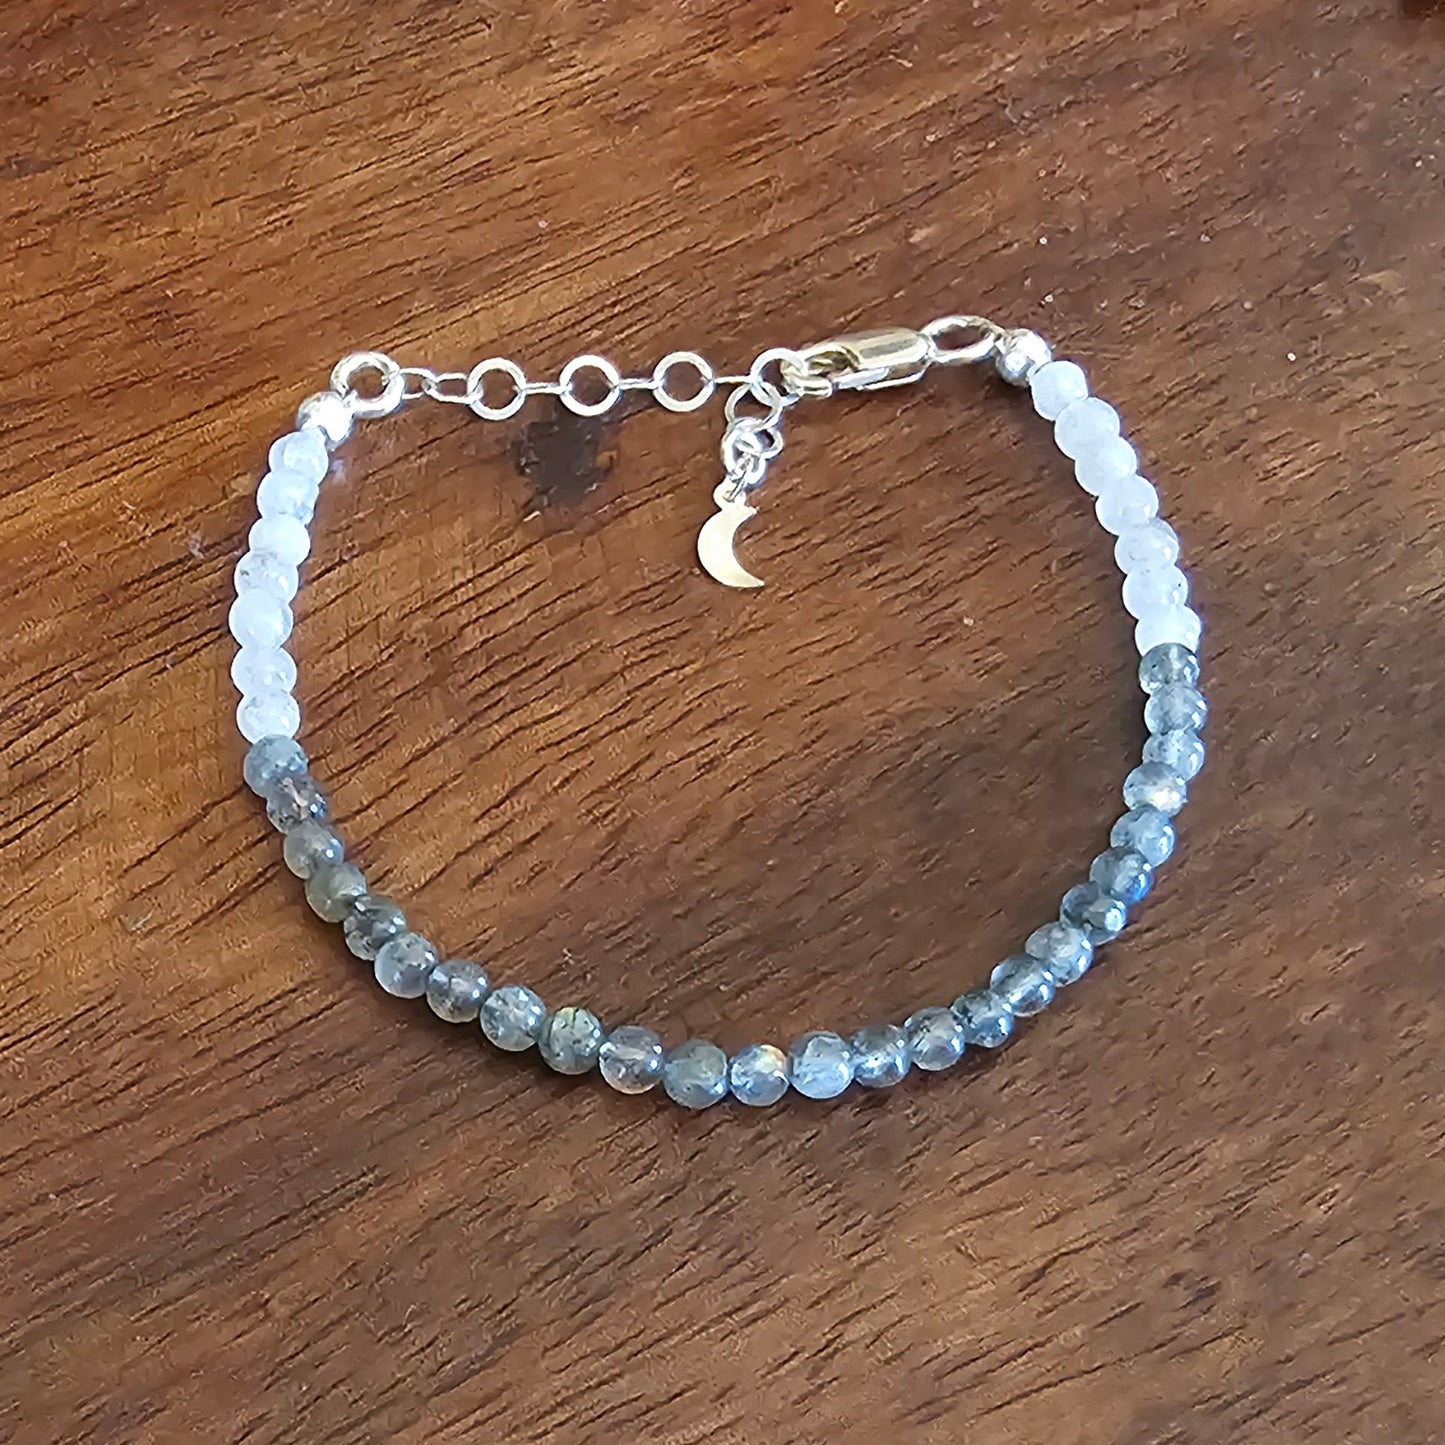 Labradorite and Moonstone Sterling Silver Bracelet